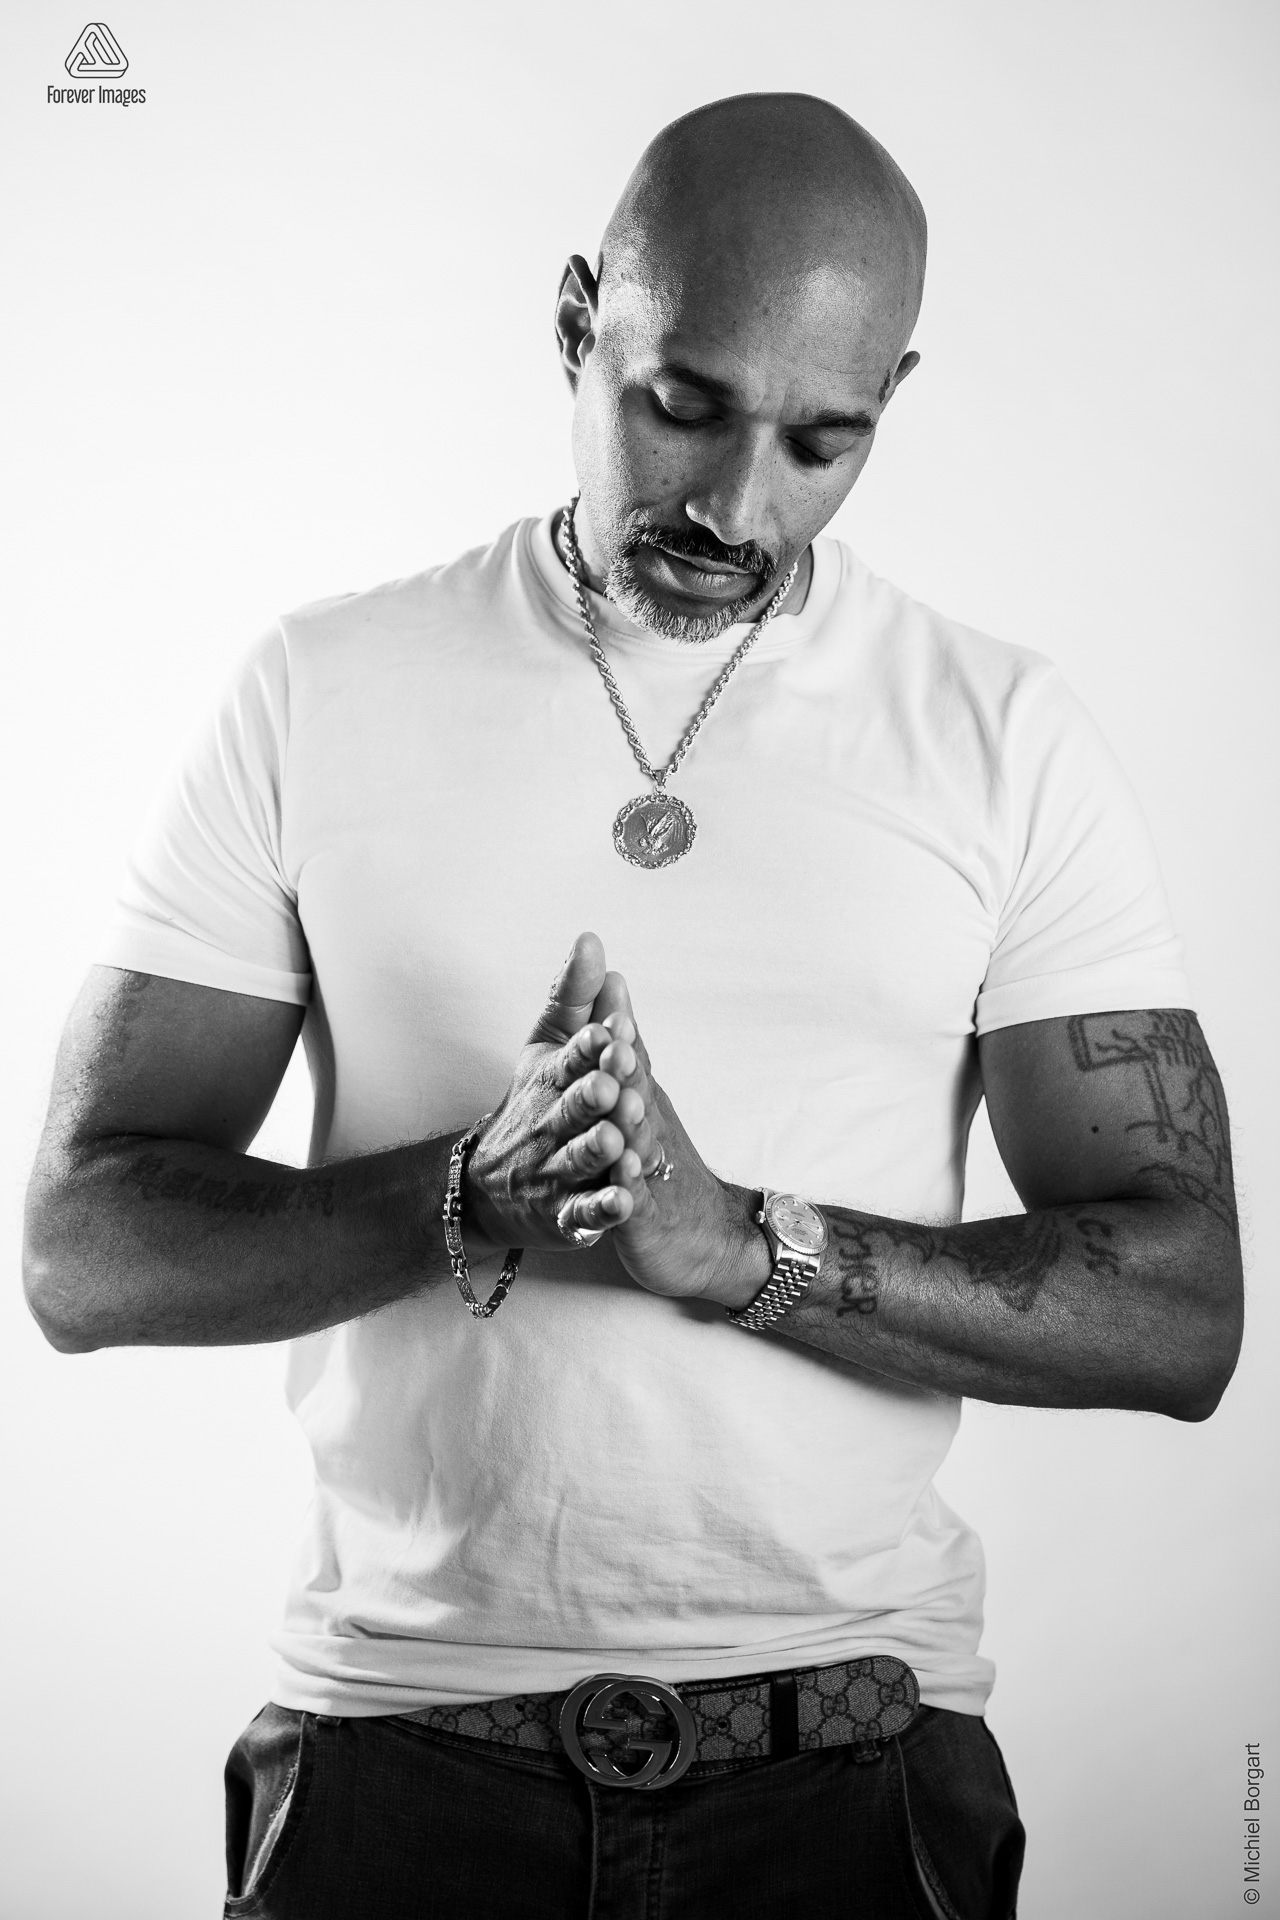 Portretfoto zwart-wit man met tattoo in wit t-shirt handen tegen elkaar | Marchall Breidel | Portretfotograaf Michiel Borgart - Forever Images.